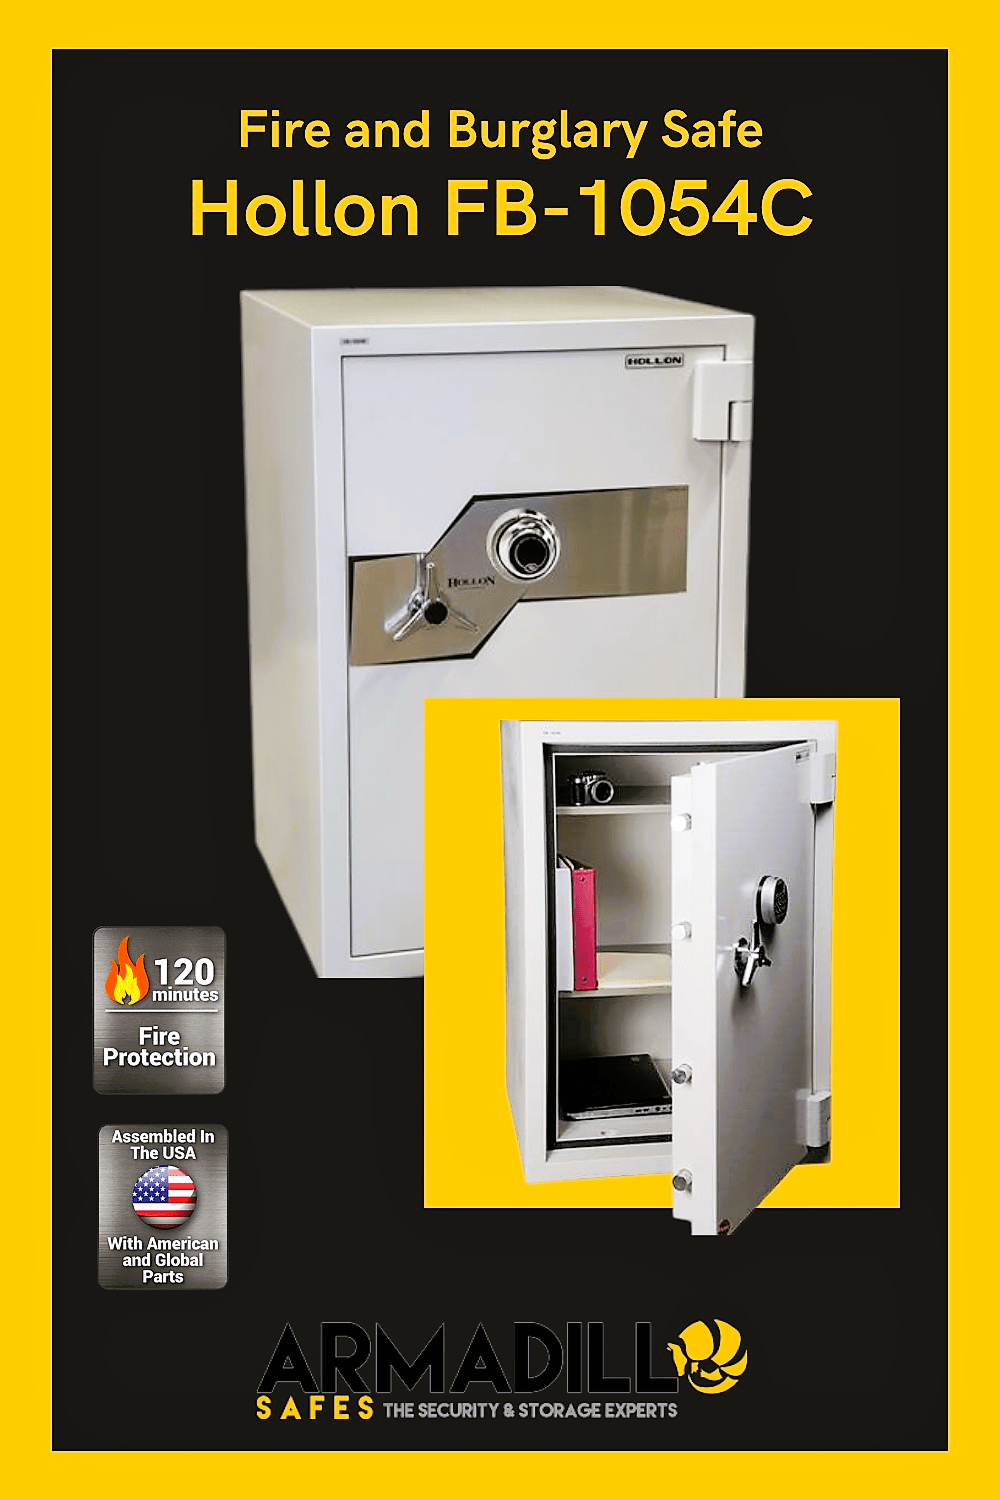 Hollon FB-1054C Fire and Burglary Safe Armadillo Safe and Vault